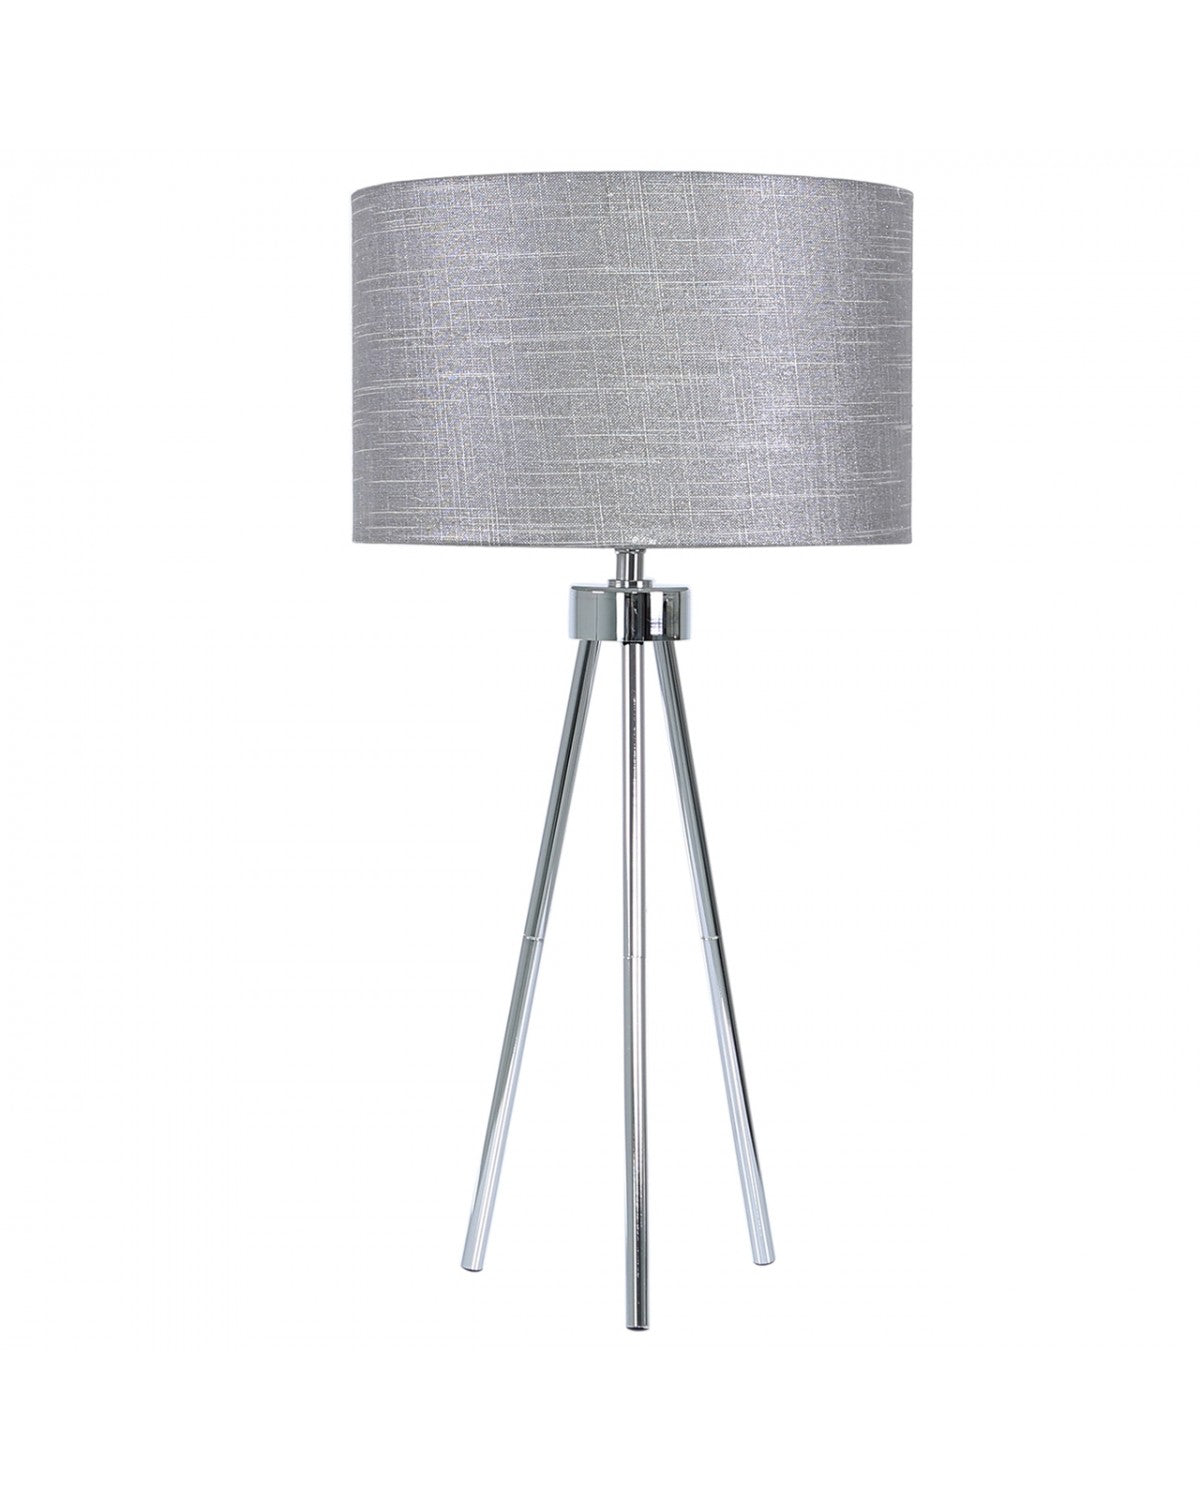 Deco Home Medium 68cm Chrome Tripod Table Lamp With Grey Linen Shade